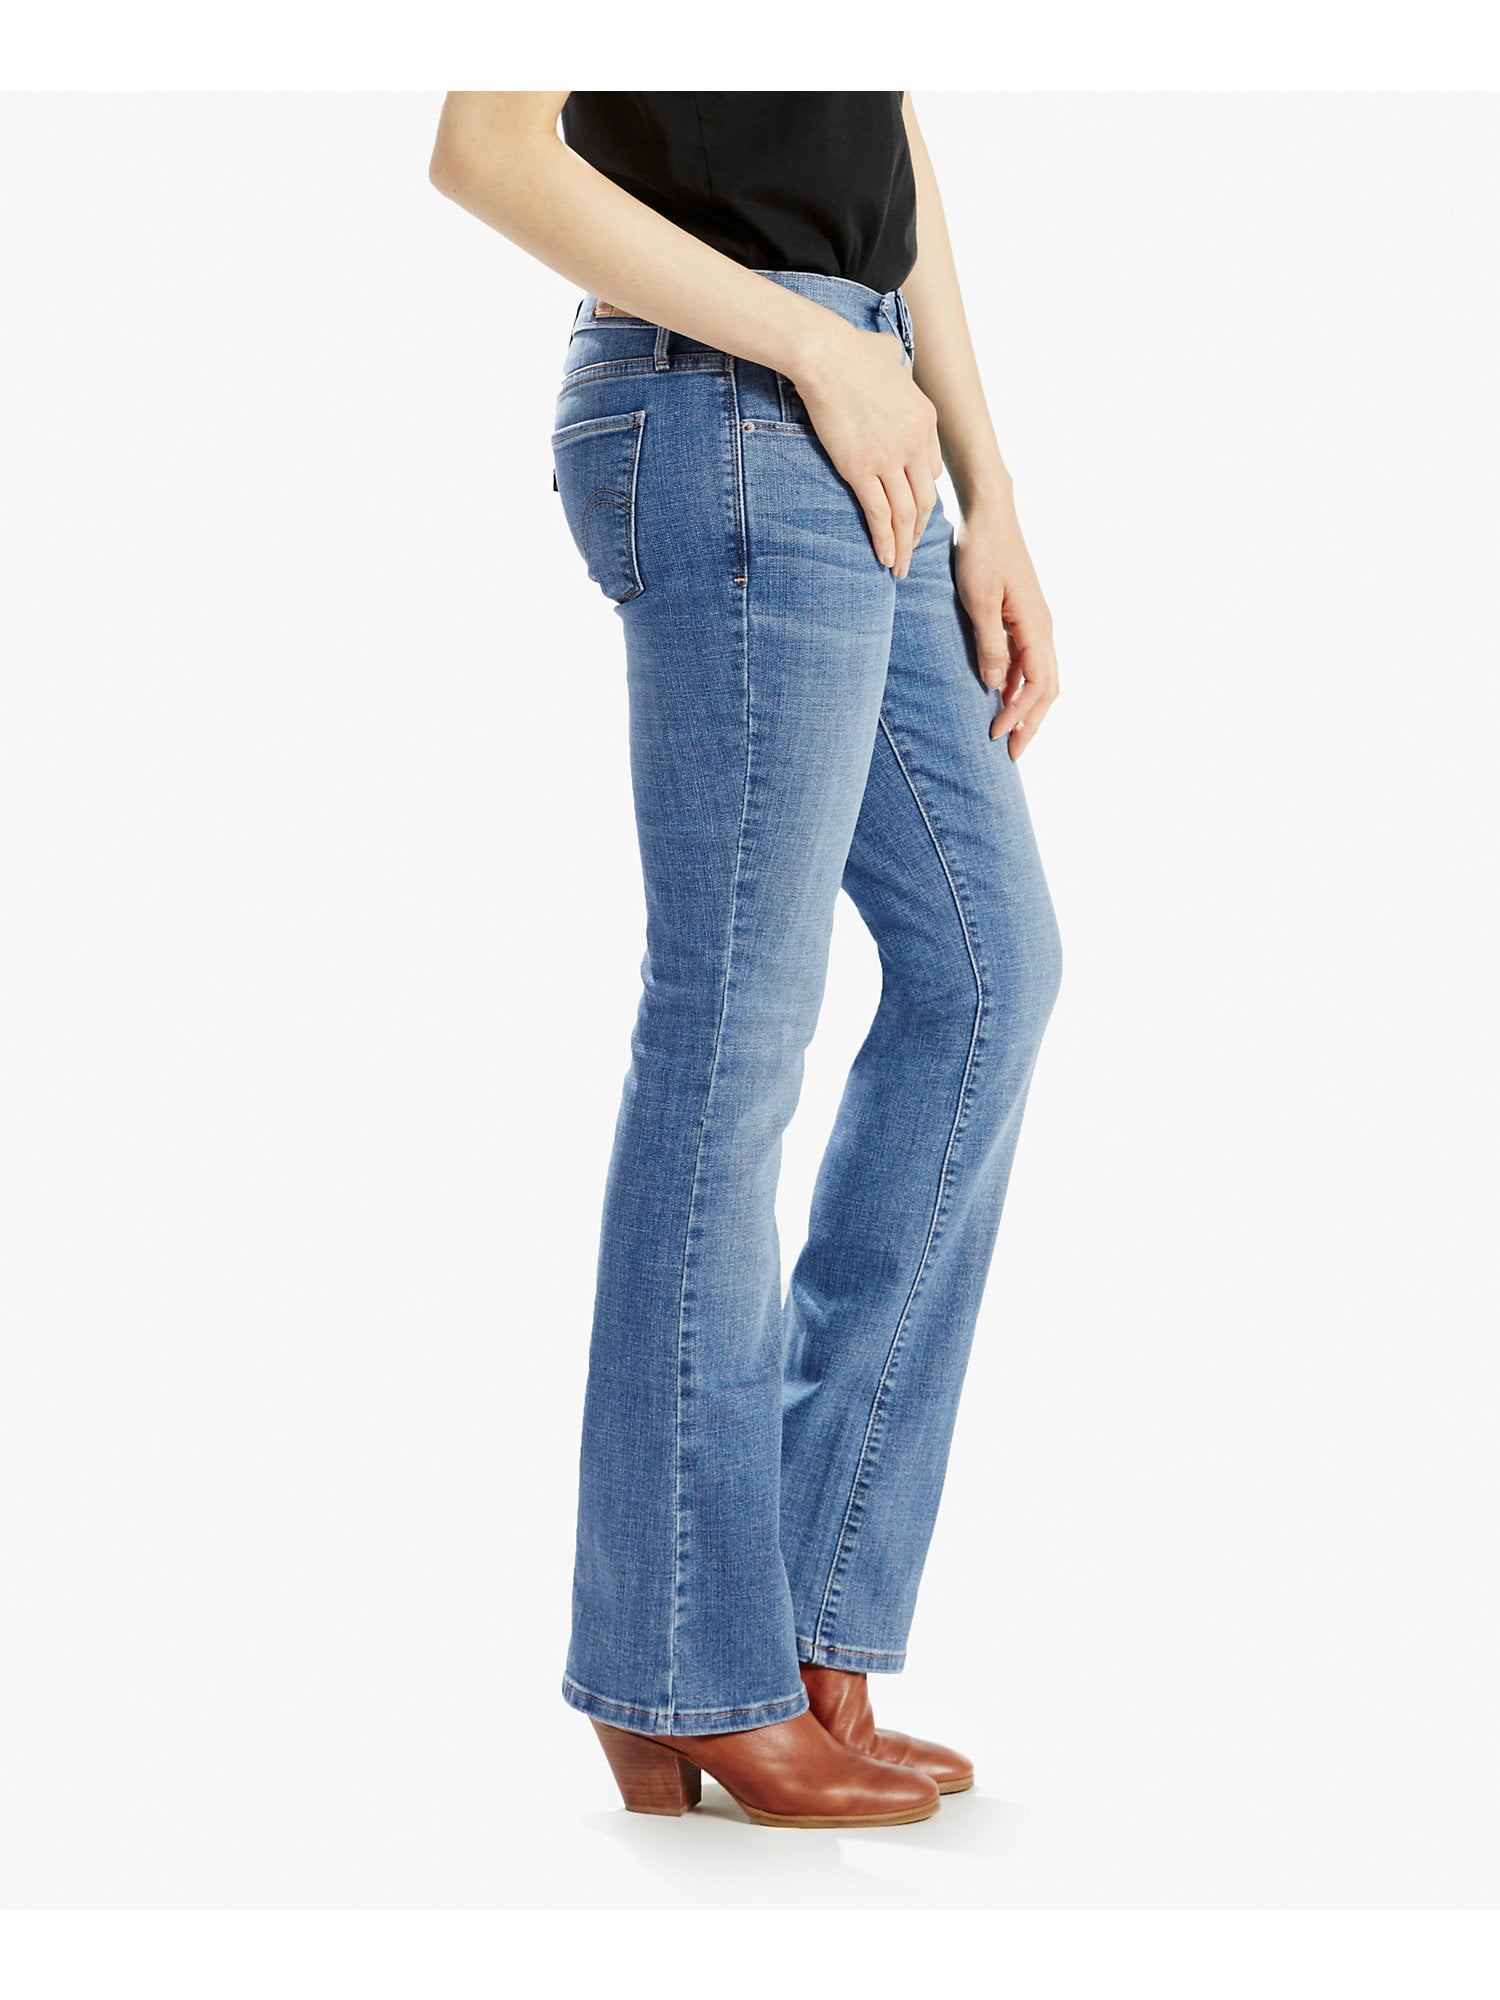 levis bootcut 515 womens jeans